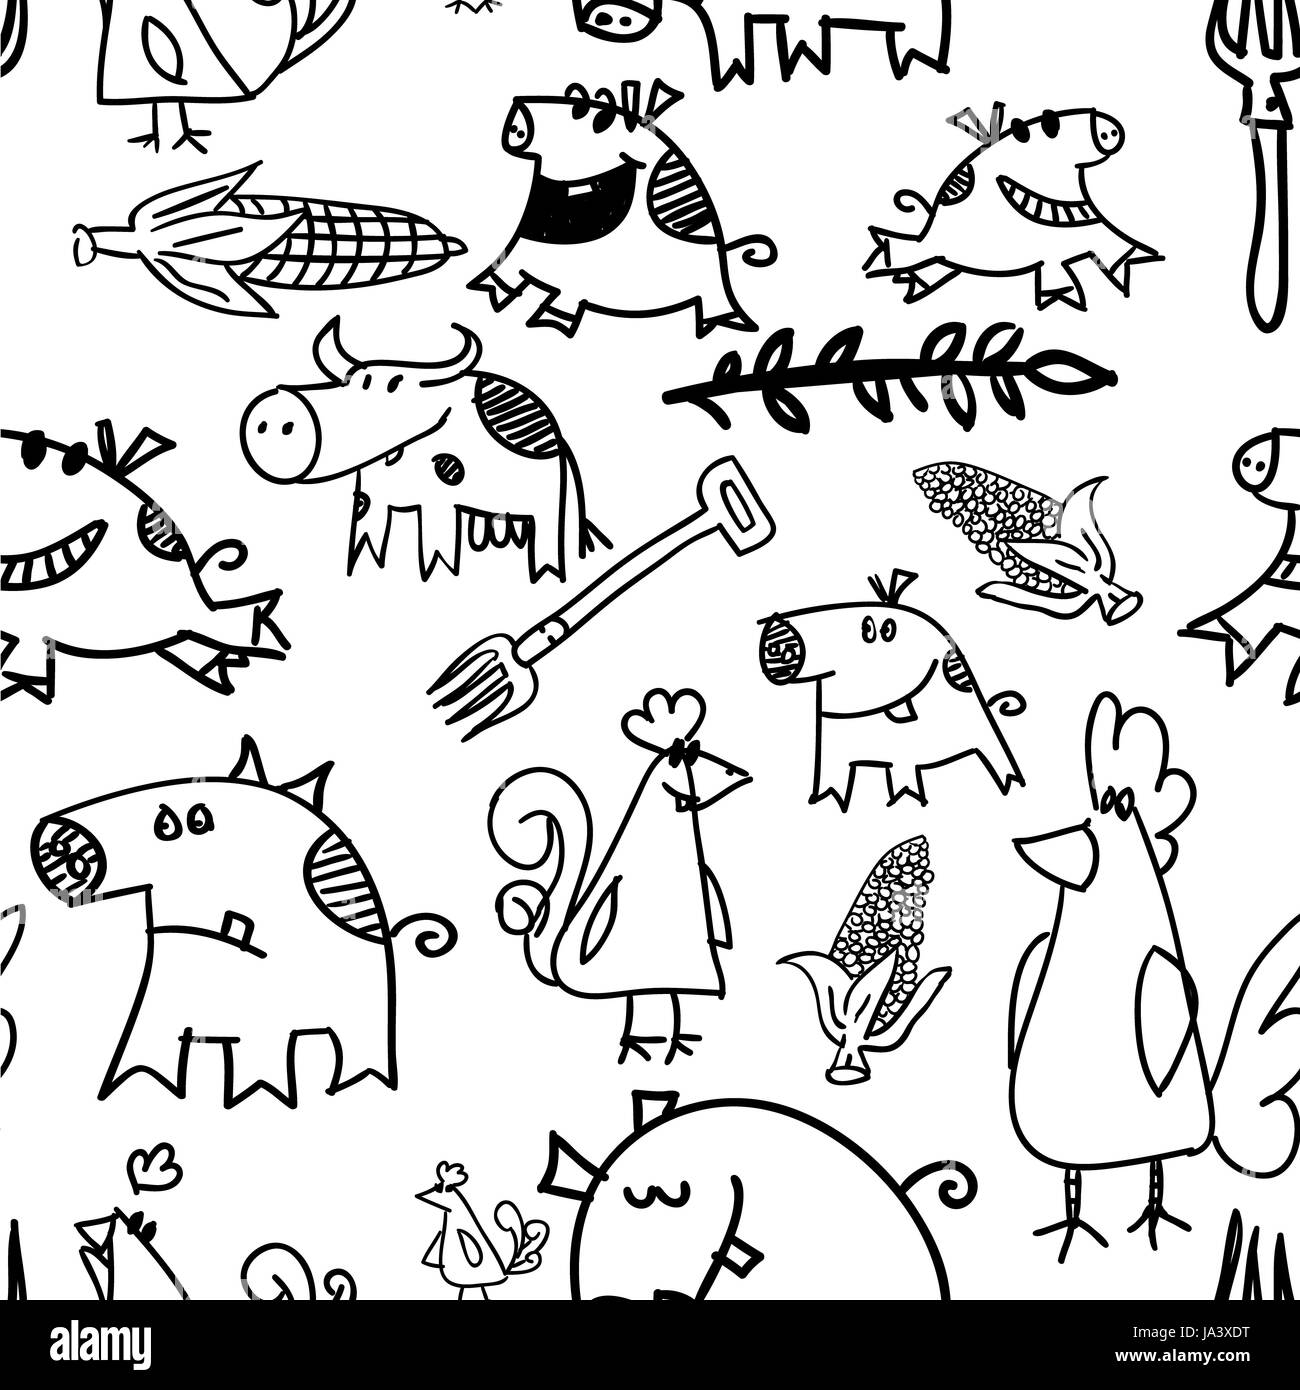 animal, animals, black, swarthy, jetblack, deep black, ornament, illustration, Stock Photo